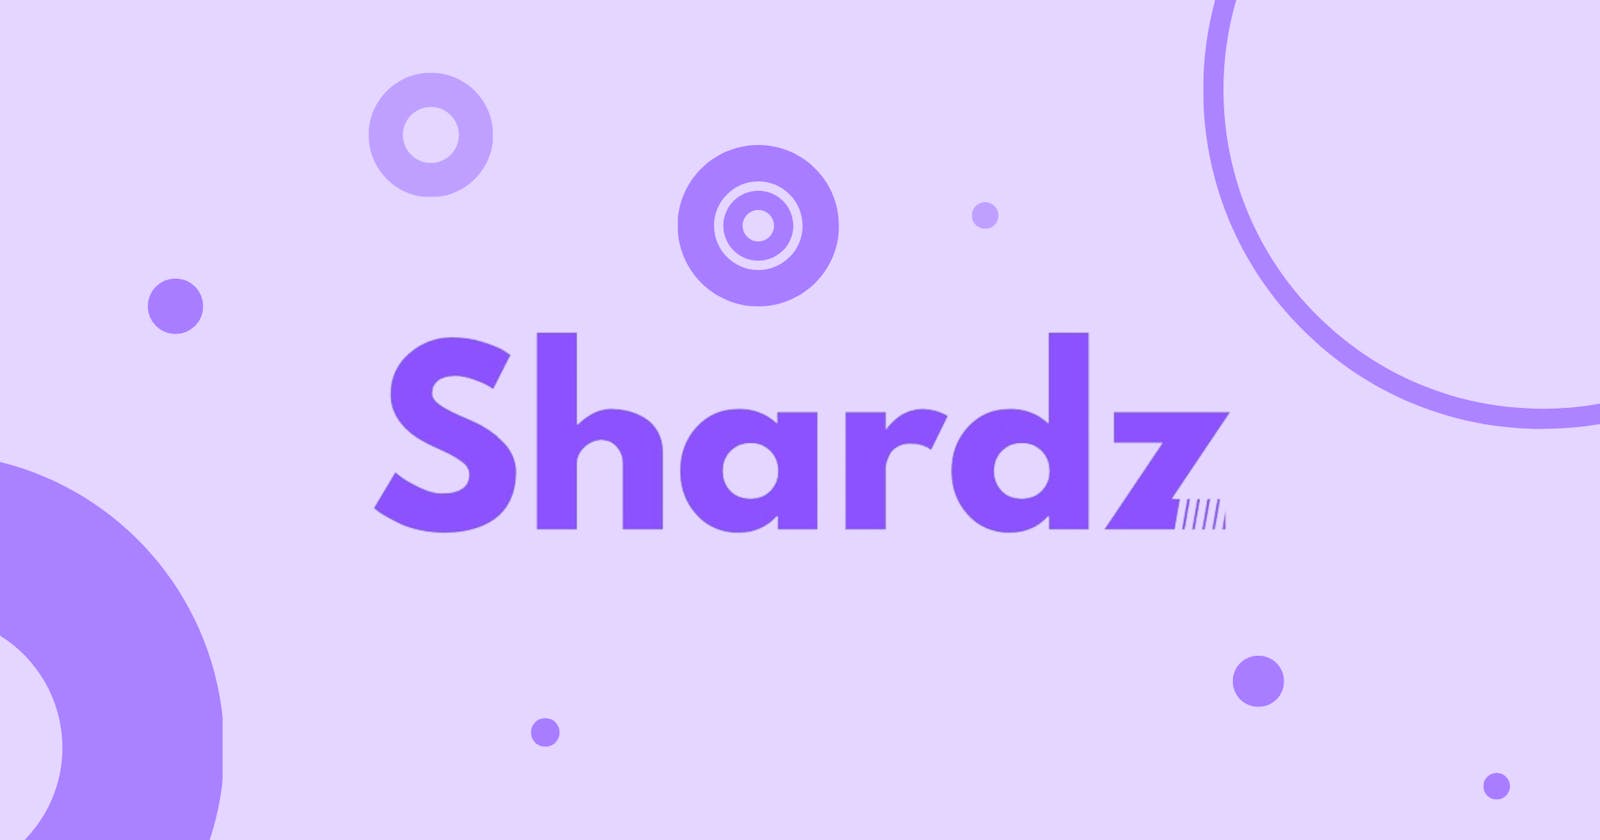 Shardz - Unleashing the power of Collective Storage